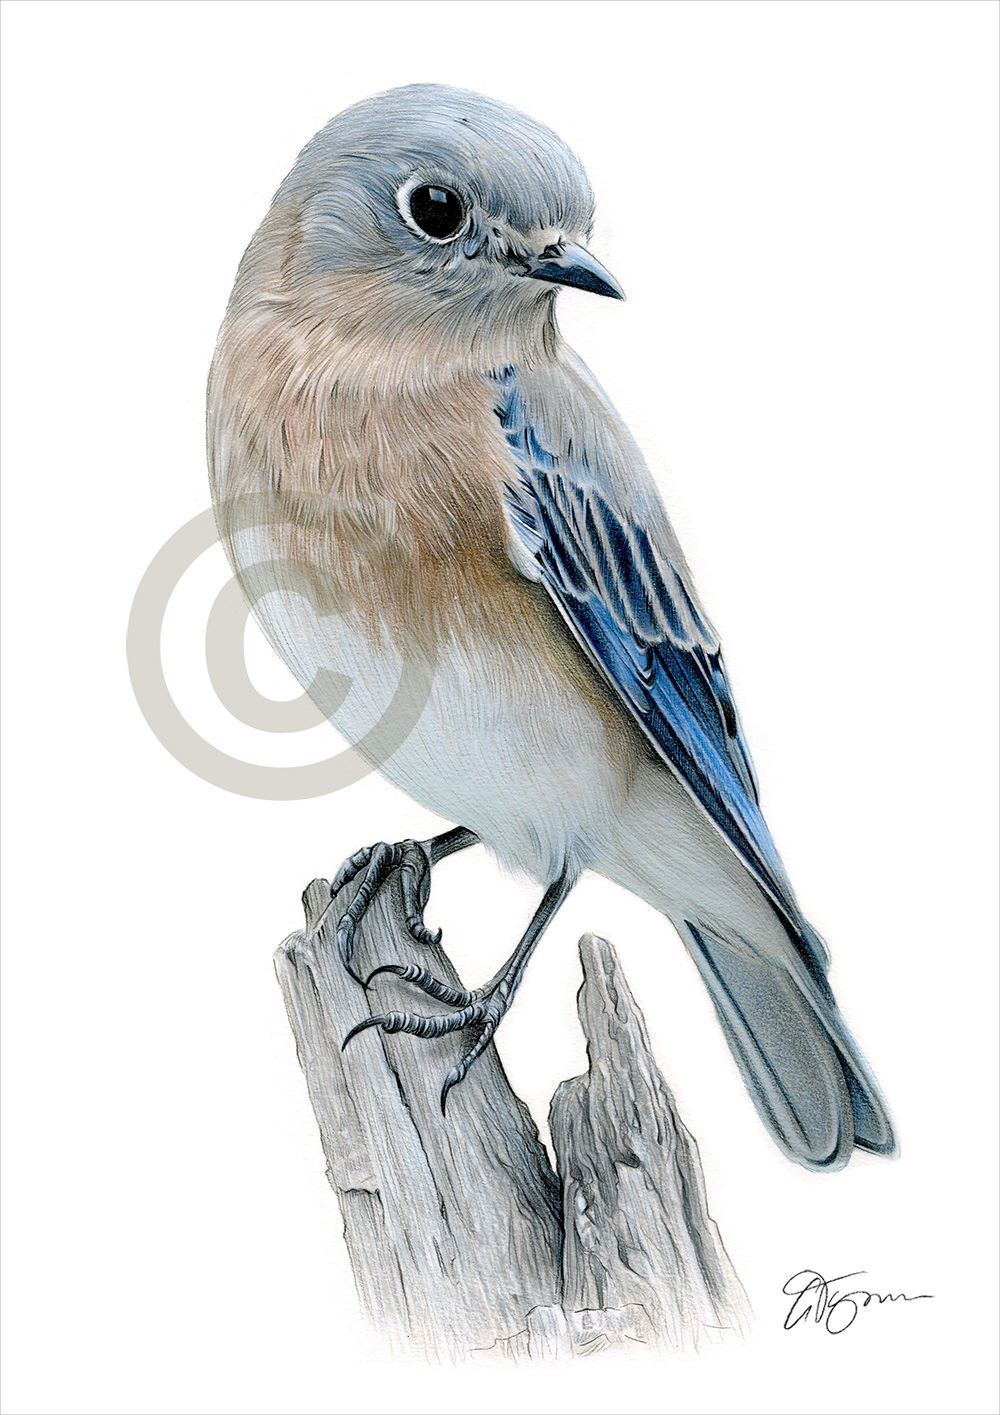 Colour pencil drawing of a bluebird by UK artist Gary Tymon